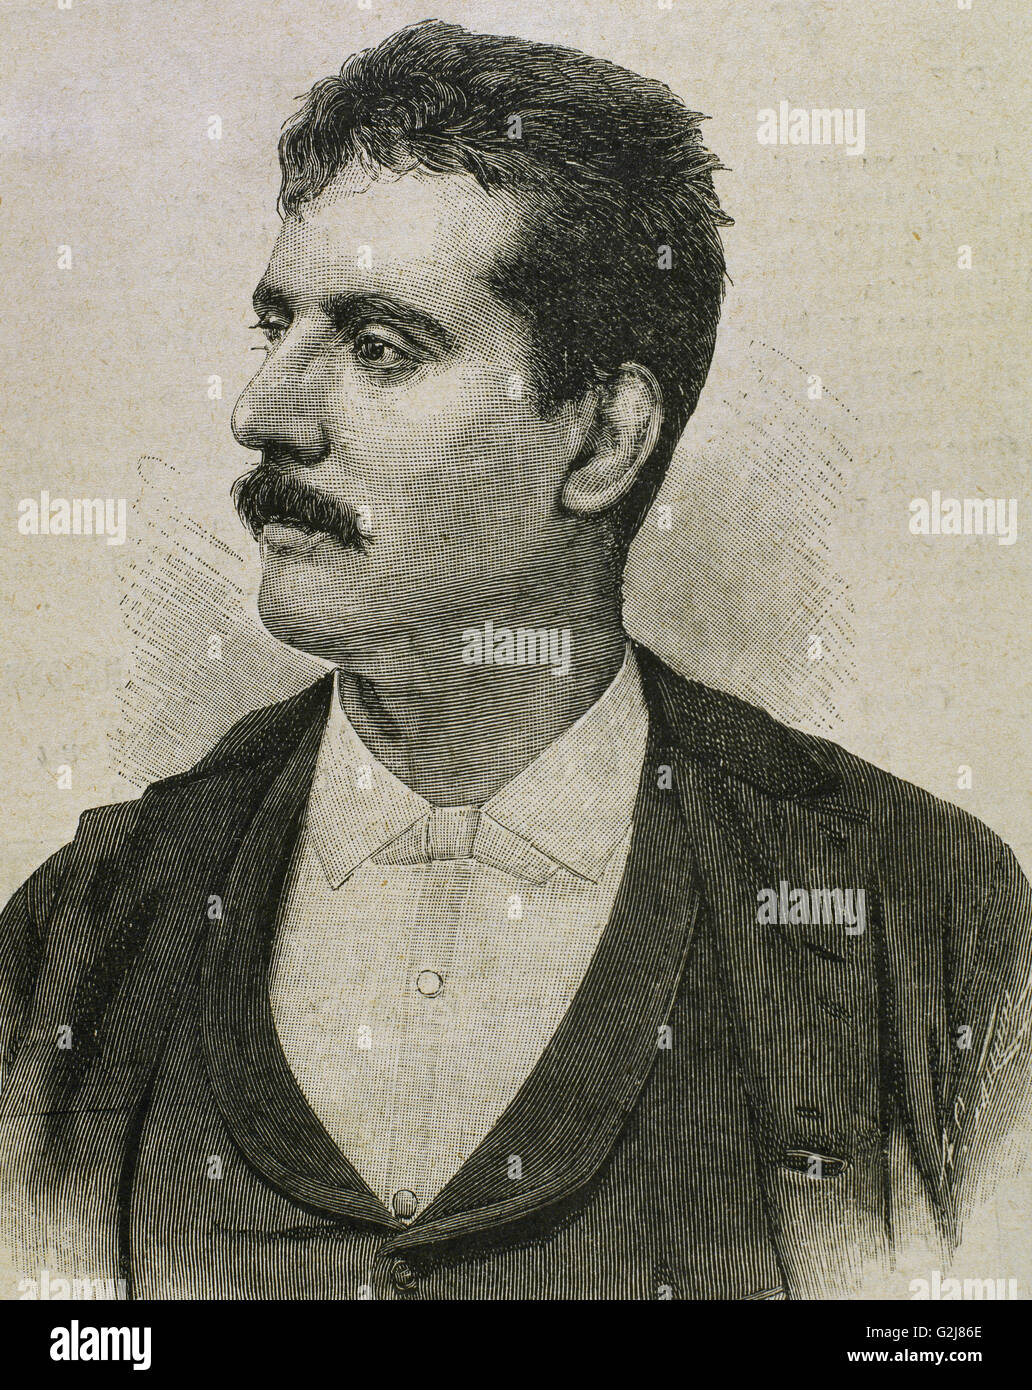 Giacomo Puccini (1858-1924). Italian composer. Portrait. Engraving. Stock Photo